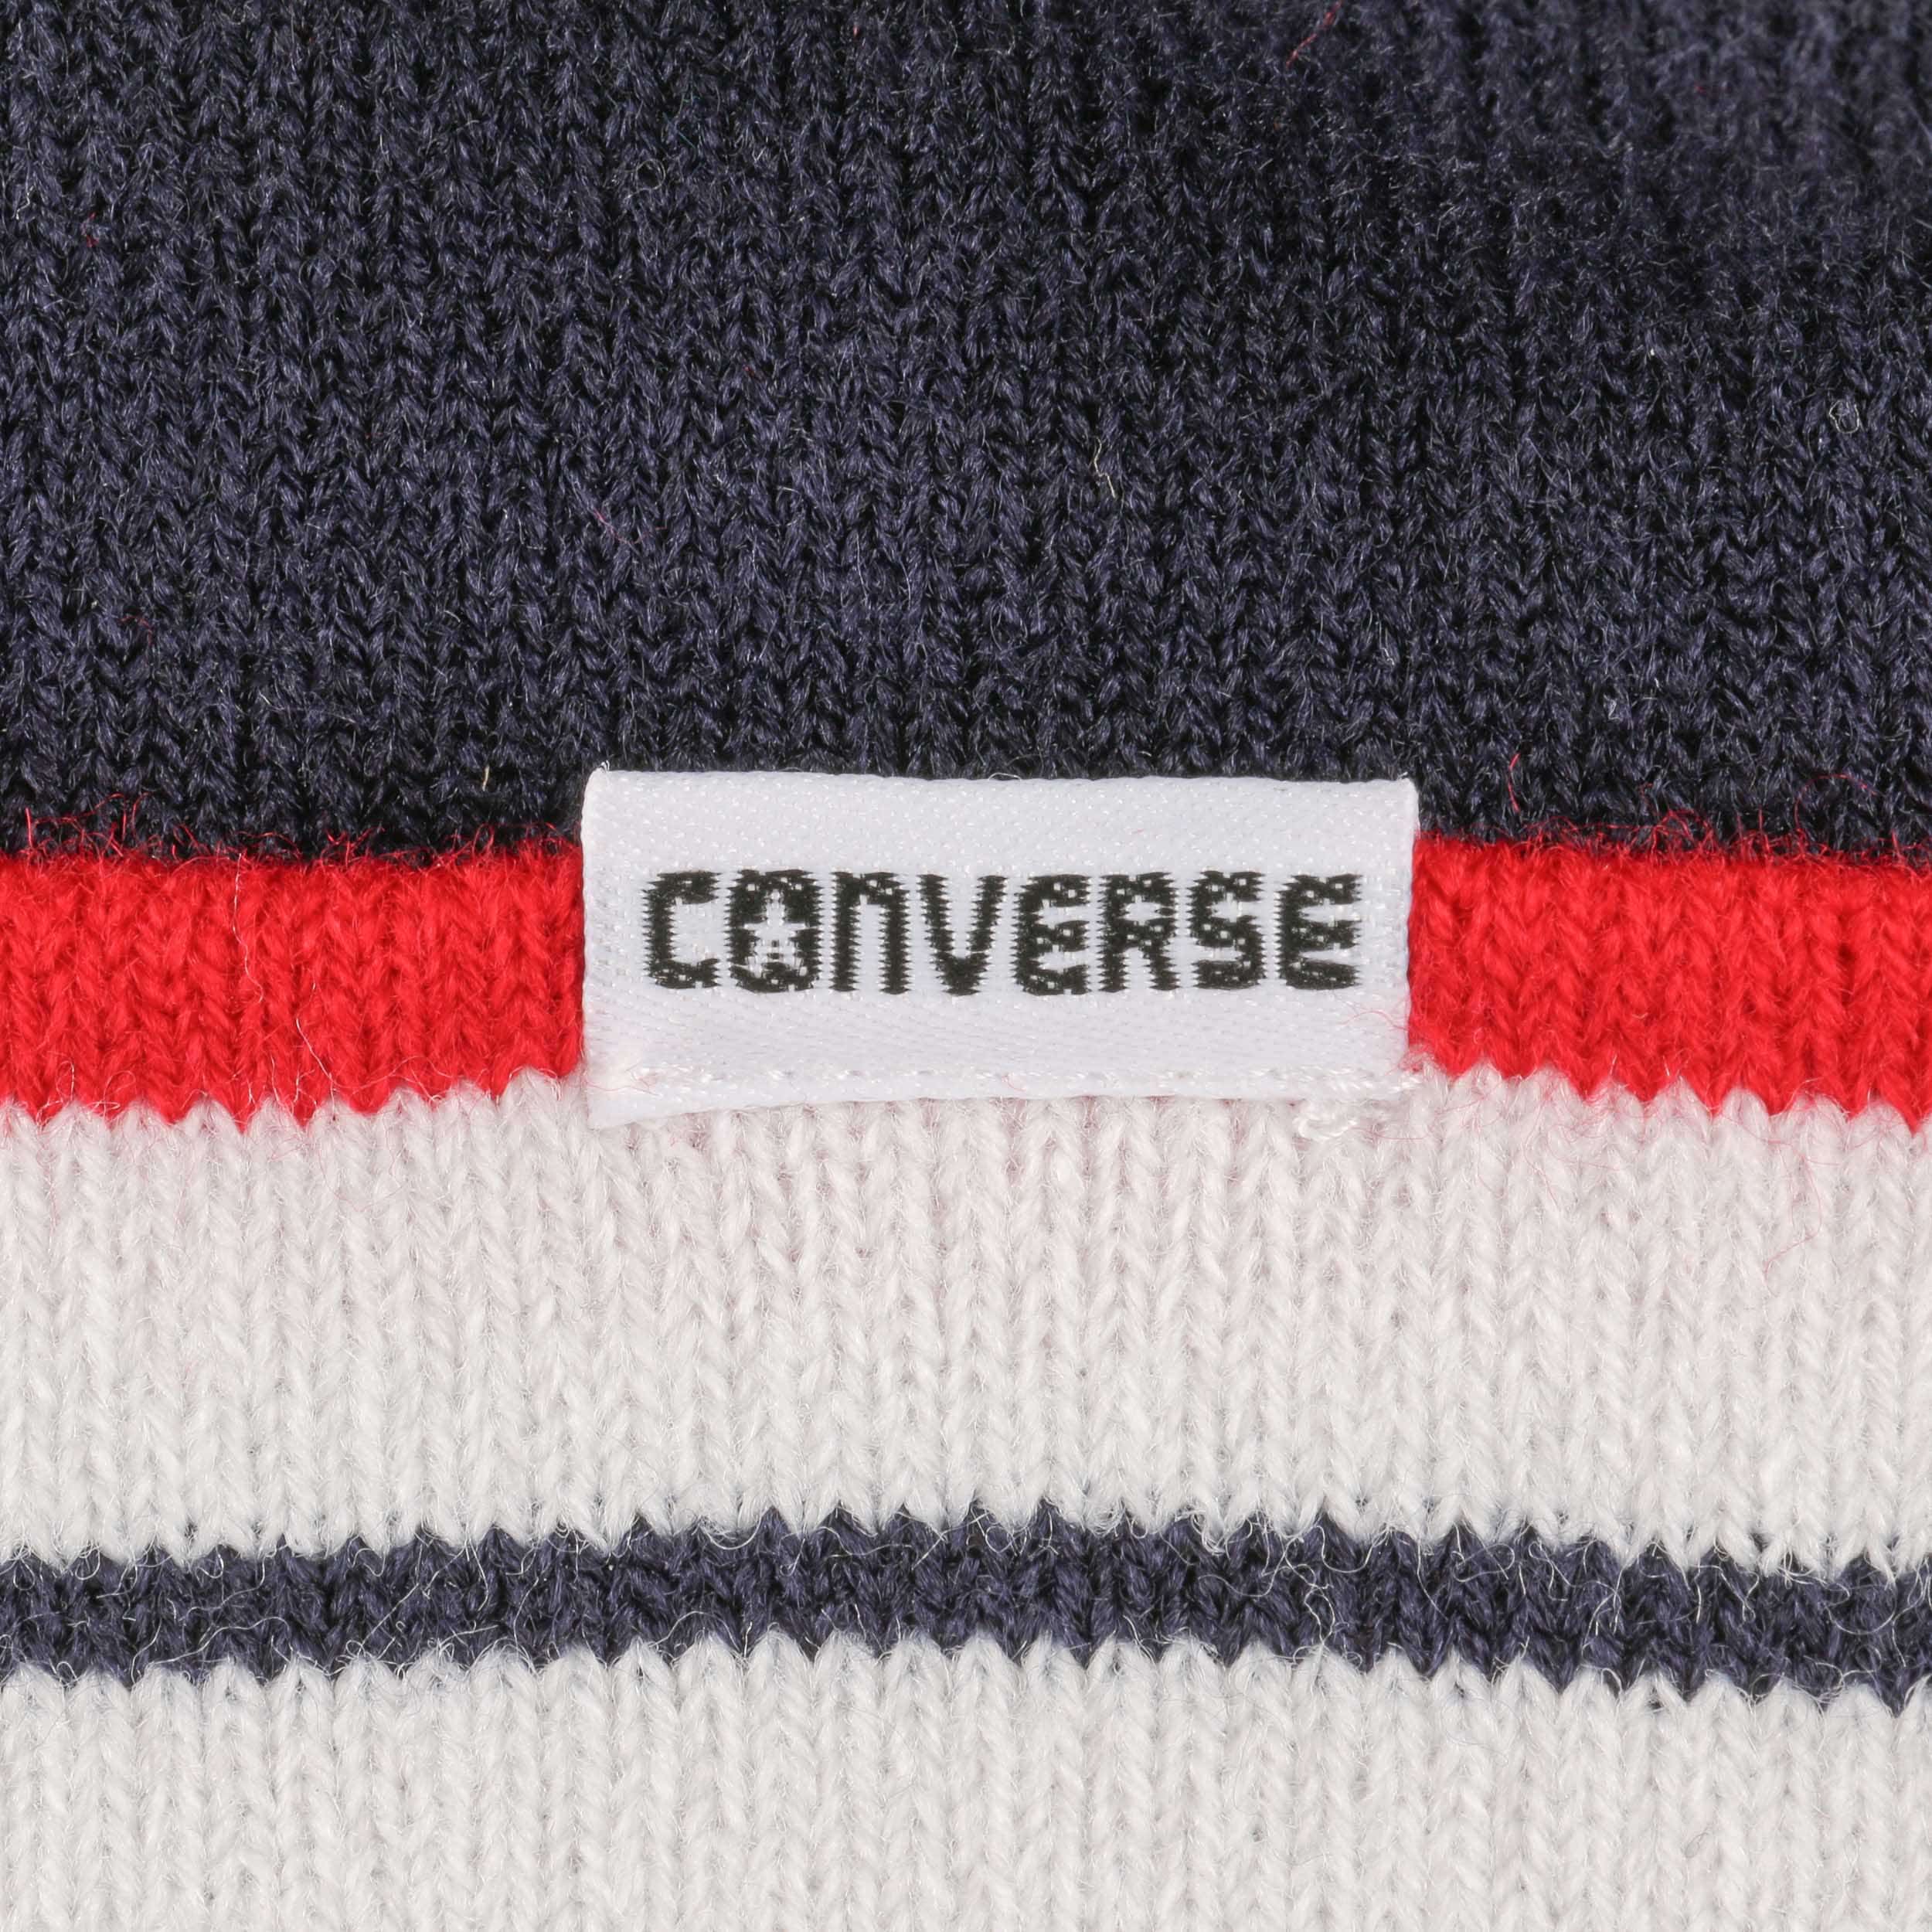 converse knitted cuff